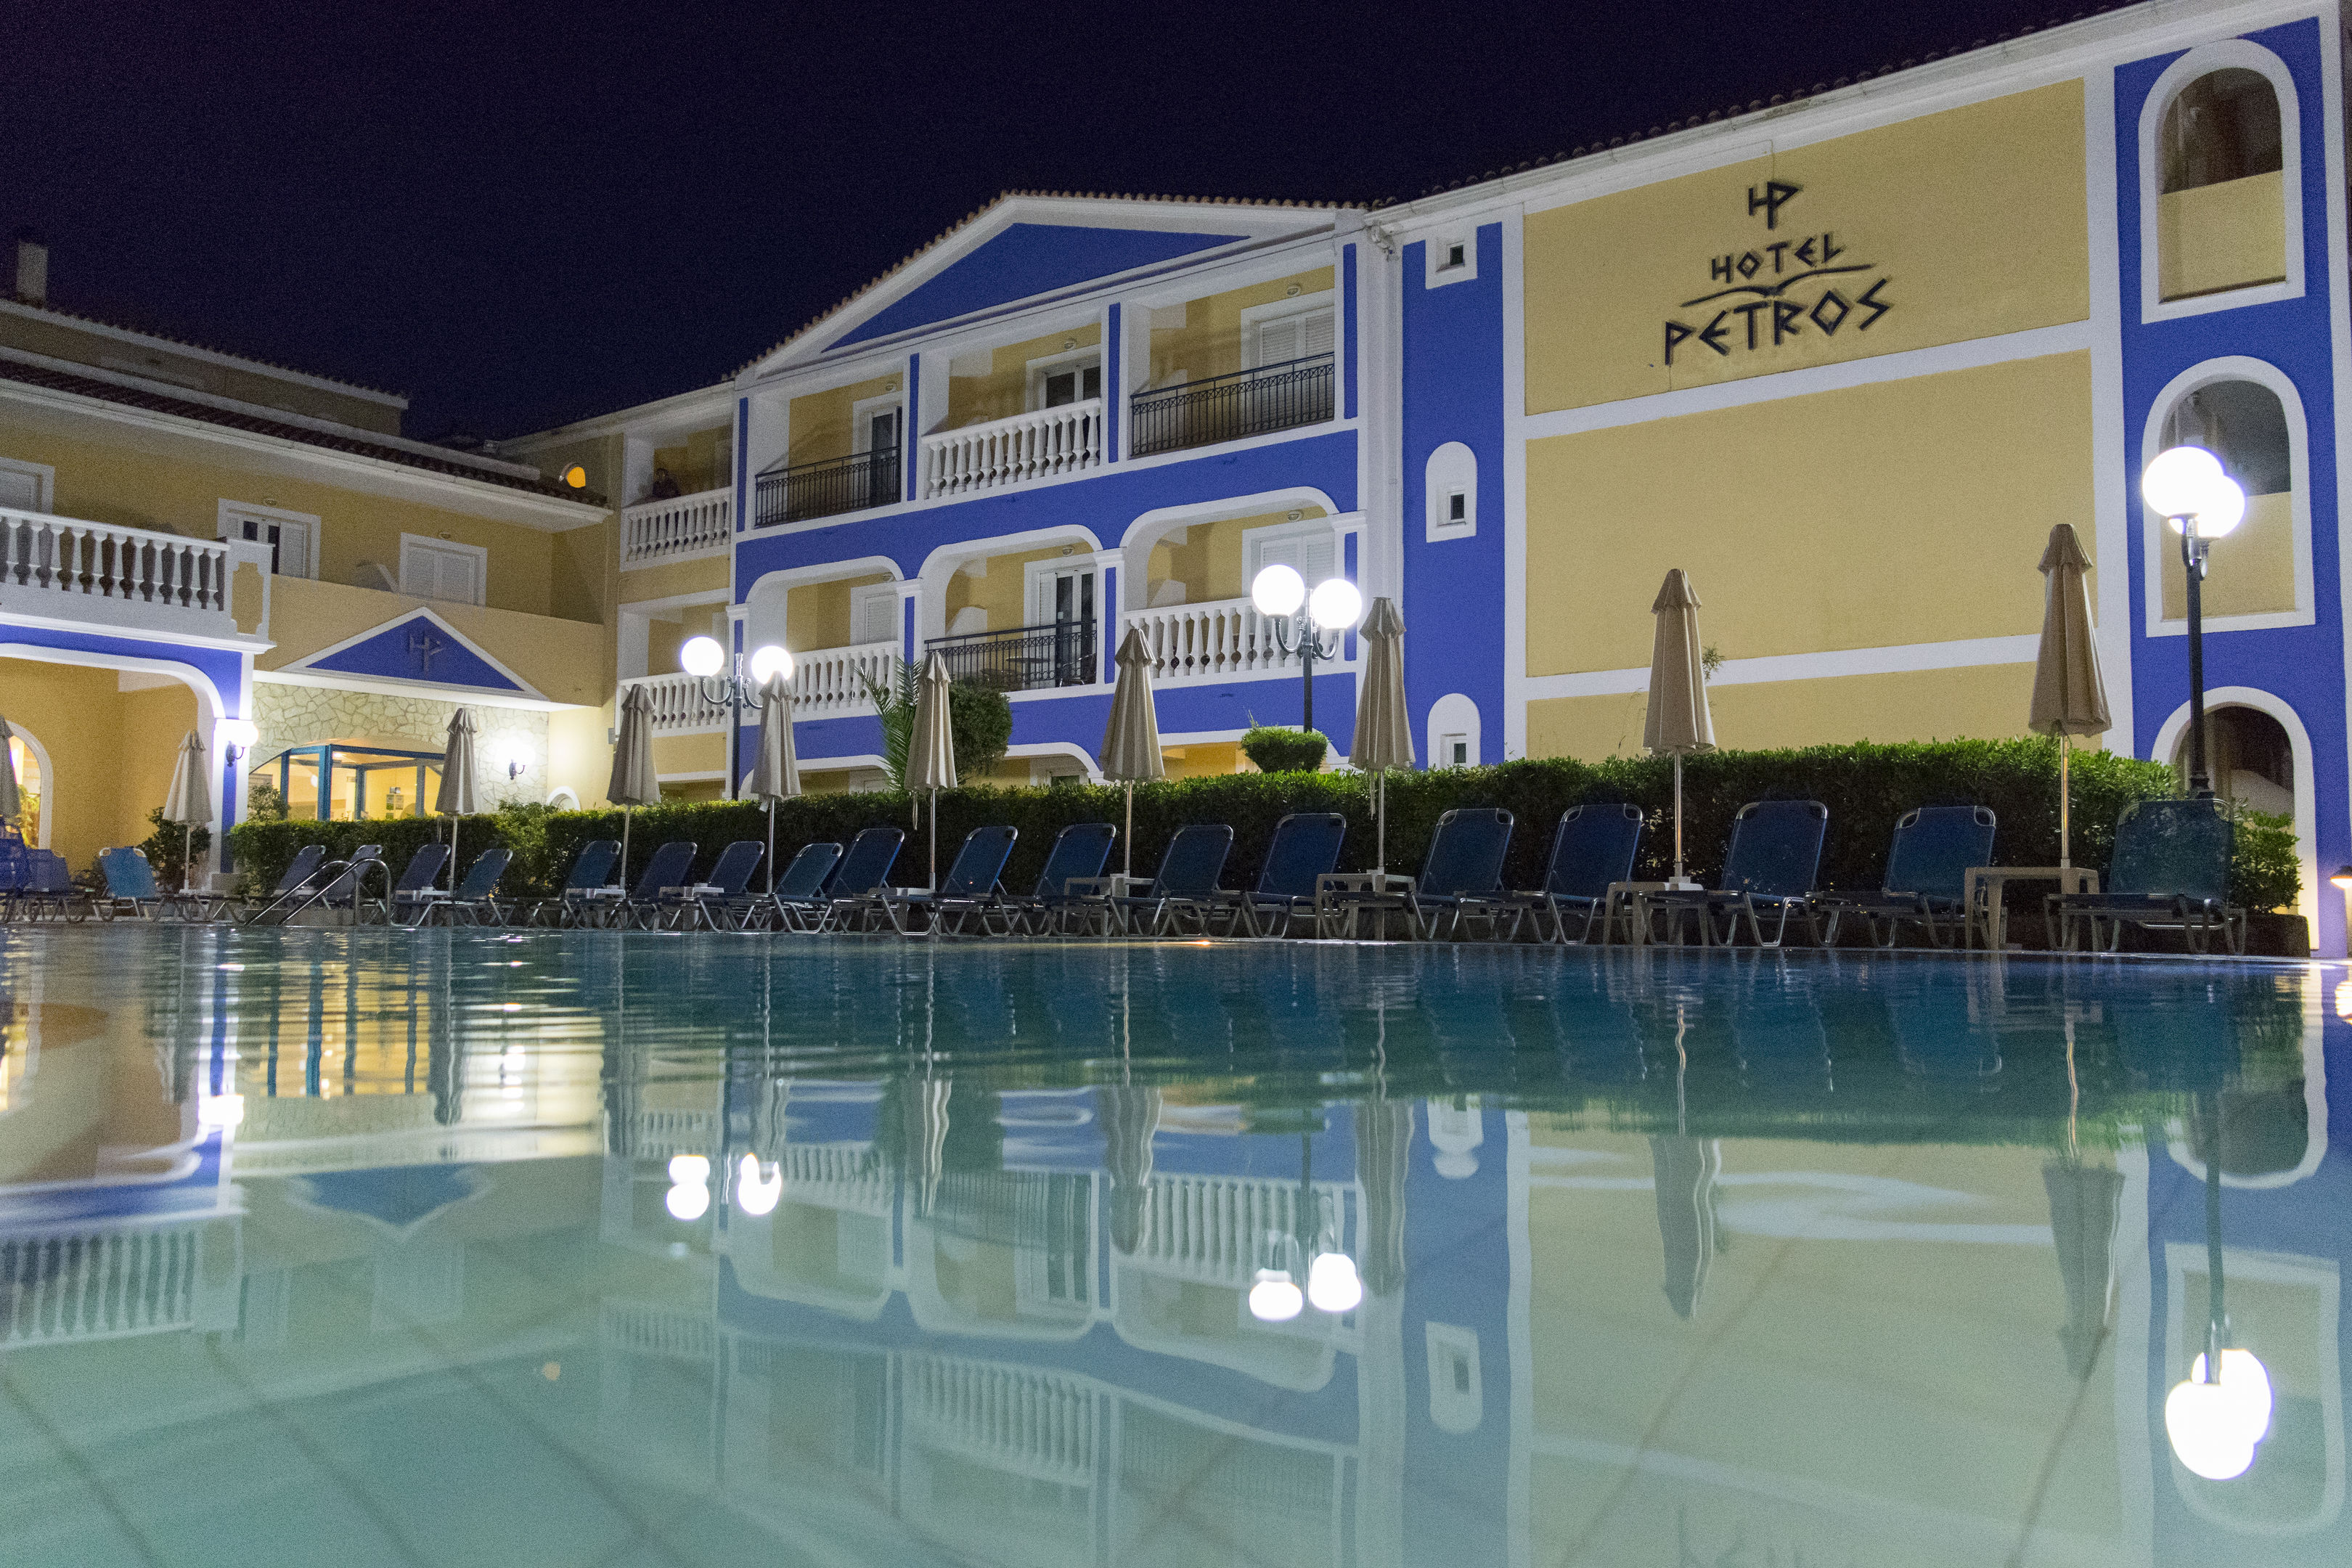 Petros Hotel Photo